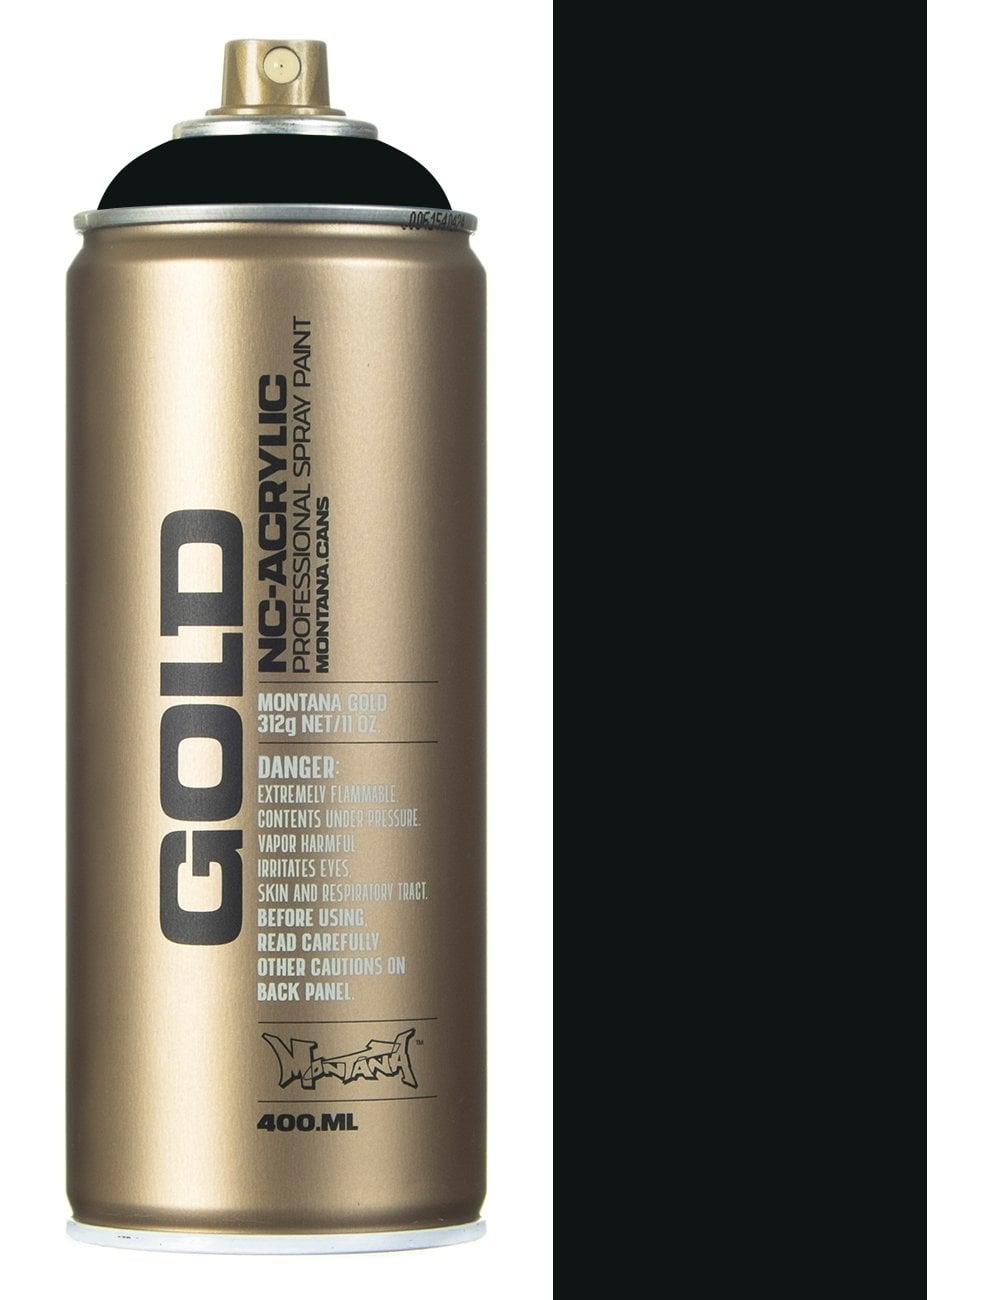 Купить Краска для граффити Montana Gold 400 мл в аэрозоли, кока, Montana (L&G VERTRIEBS GmbH), Германия